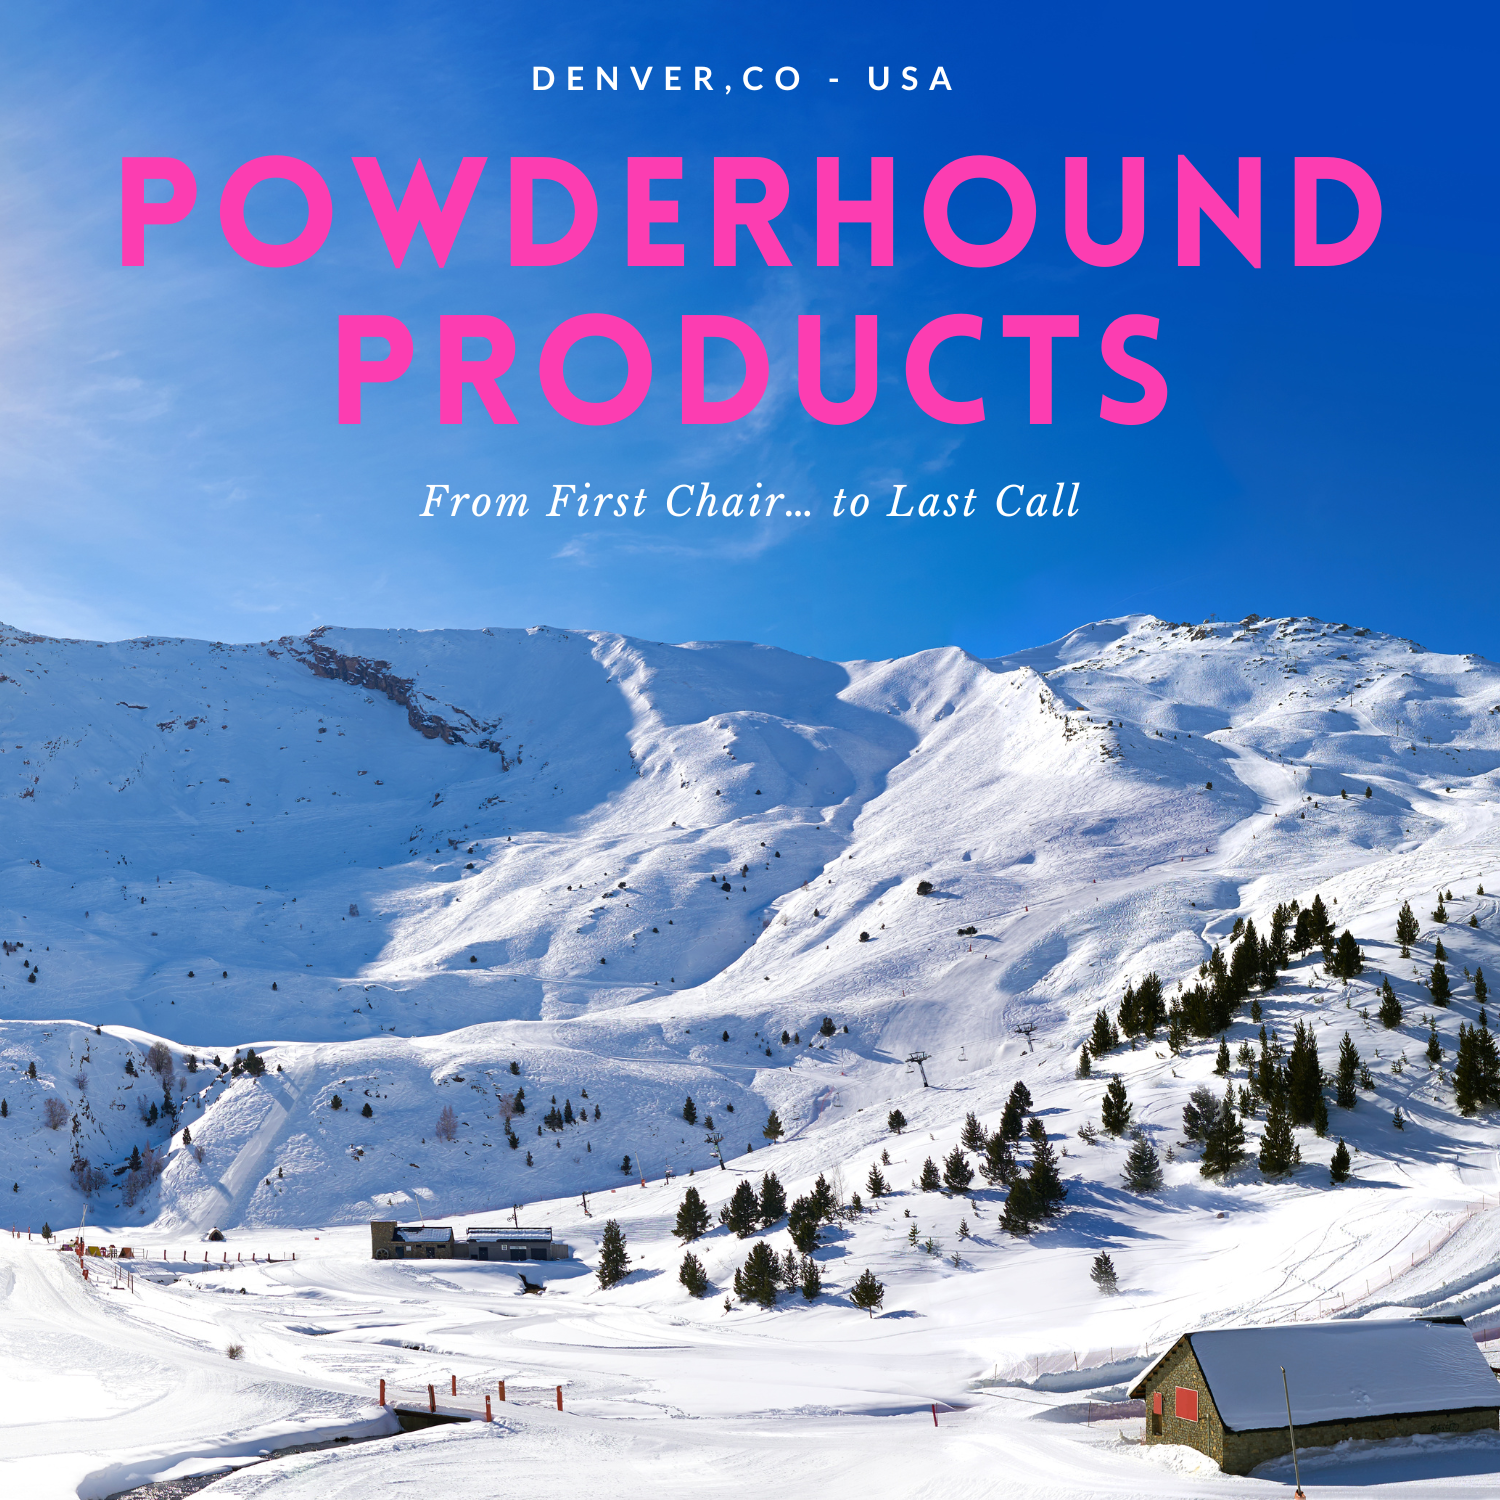 Powderhound, Powder, Hound, Powdrhounds, Product, Products, Denver, CO, Colorado, USA, Outdoors, Hiking, Biking, Camping, Trees, Hike, Bike, Camp, Trail, Mountain, park, Ski, Snowboard, Skiing, Snowboarding, Apres, 